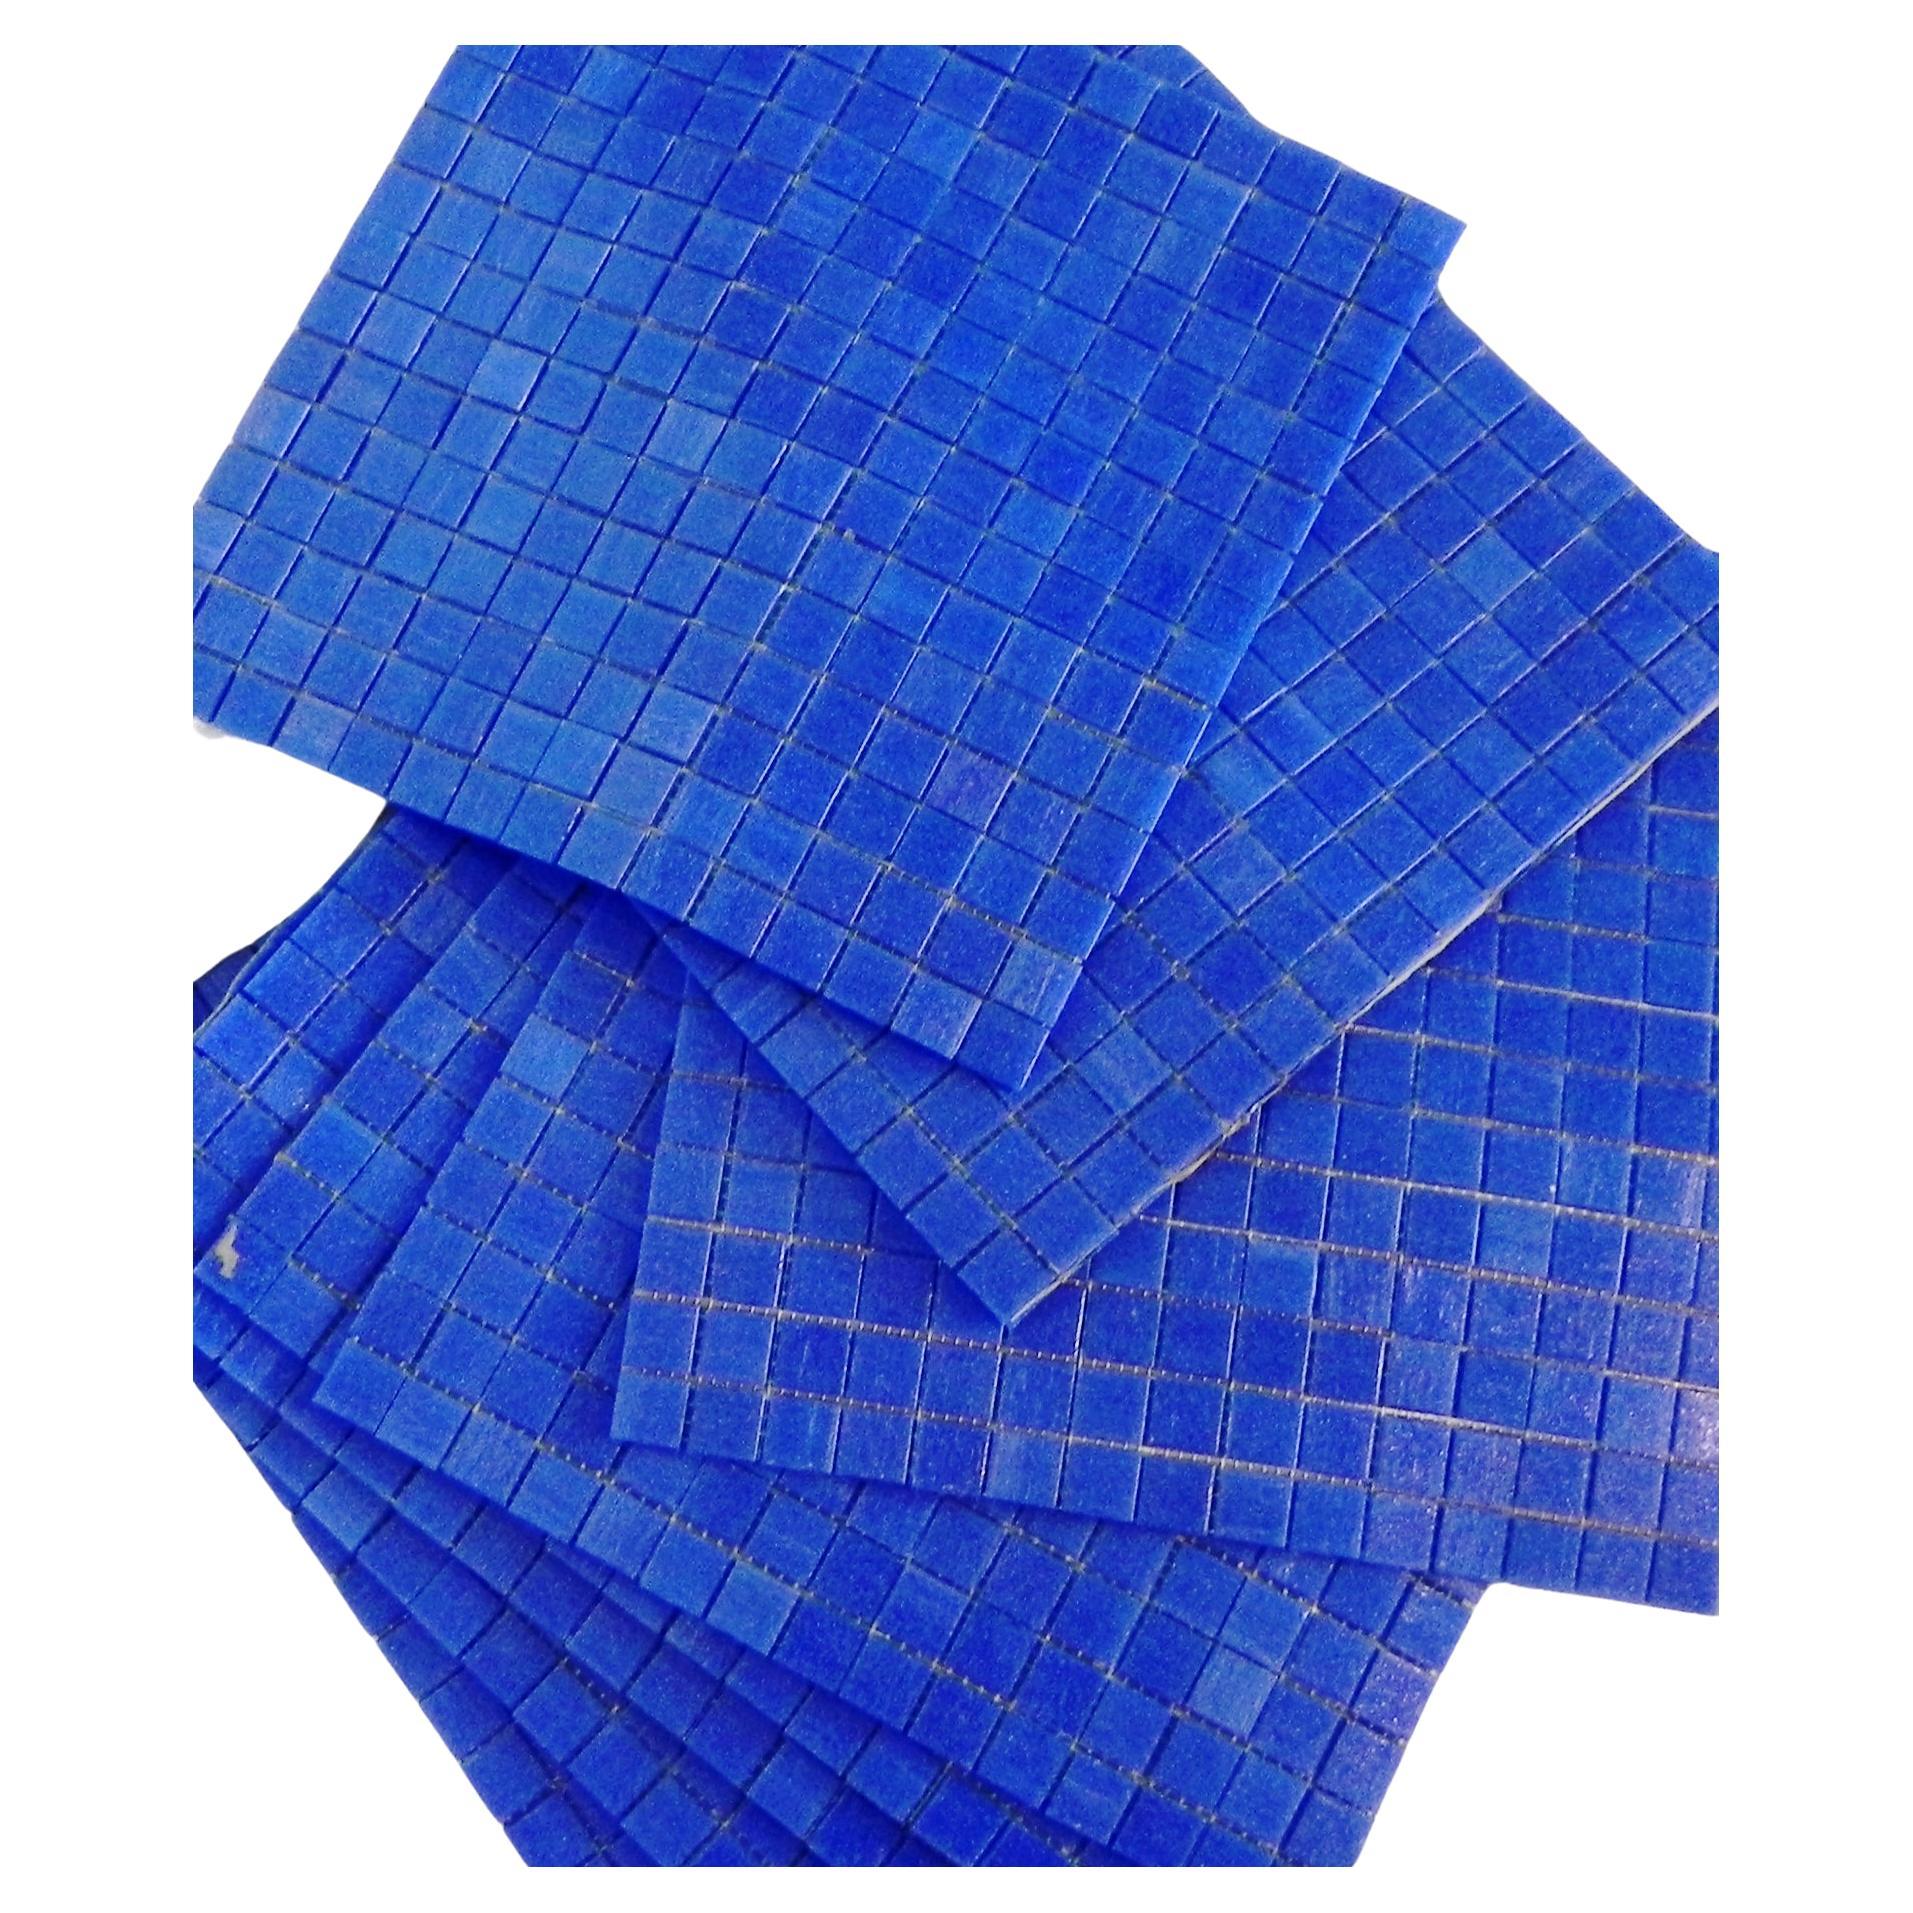 8 mosaïques fogli Bisazza bleus, années 90